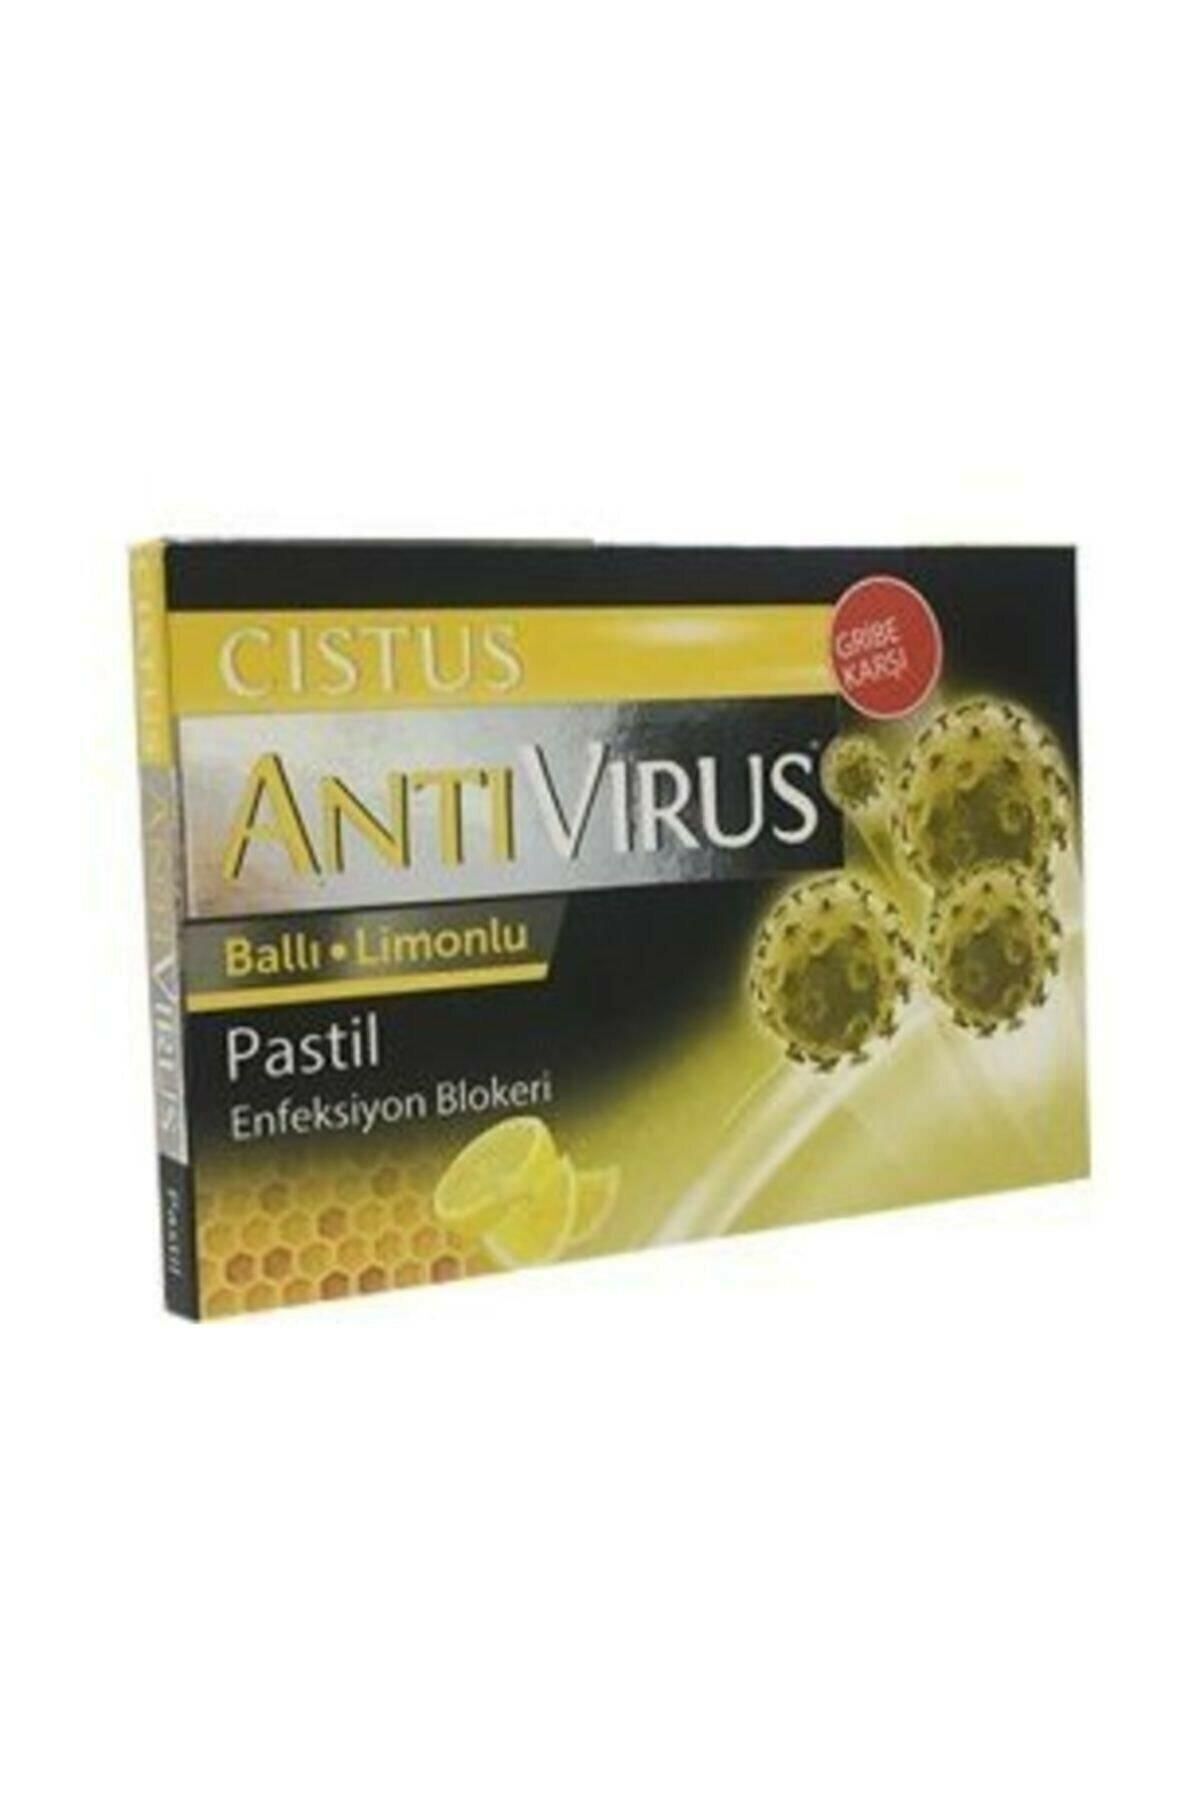 CISTUS Antivirus Pastil Ballı Limonlu S01420